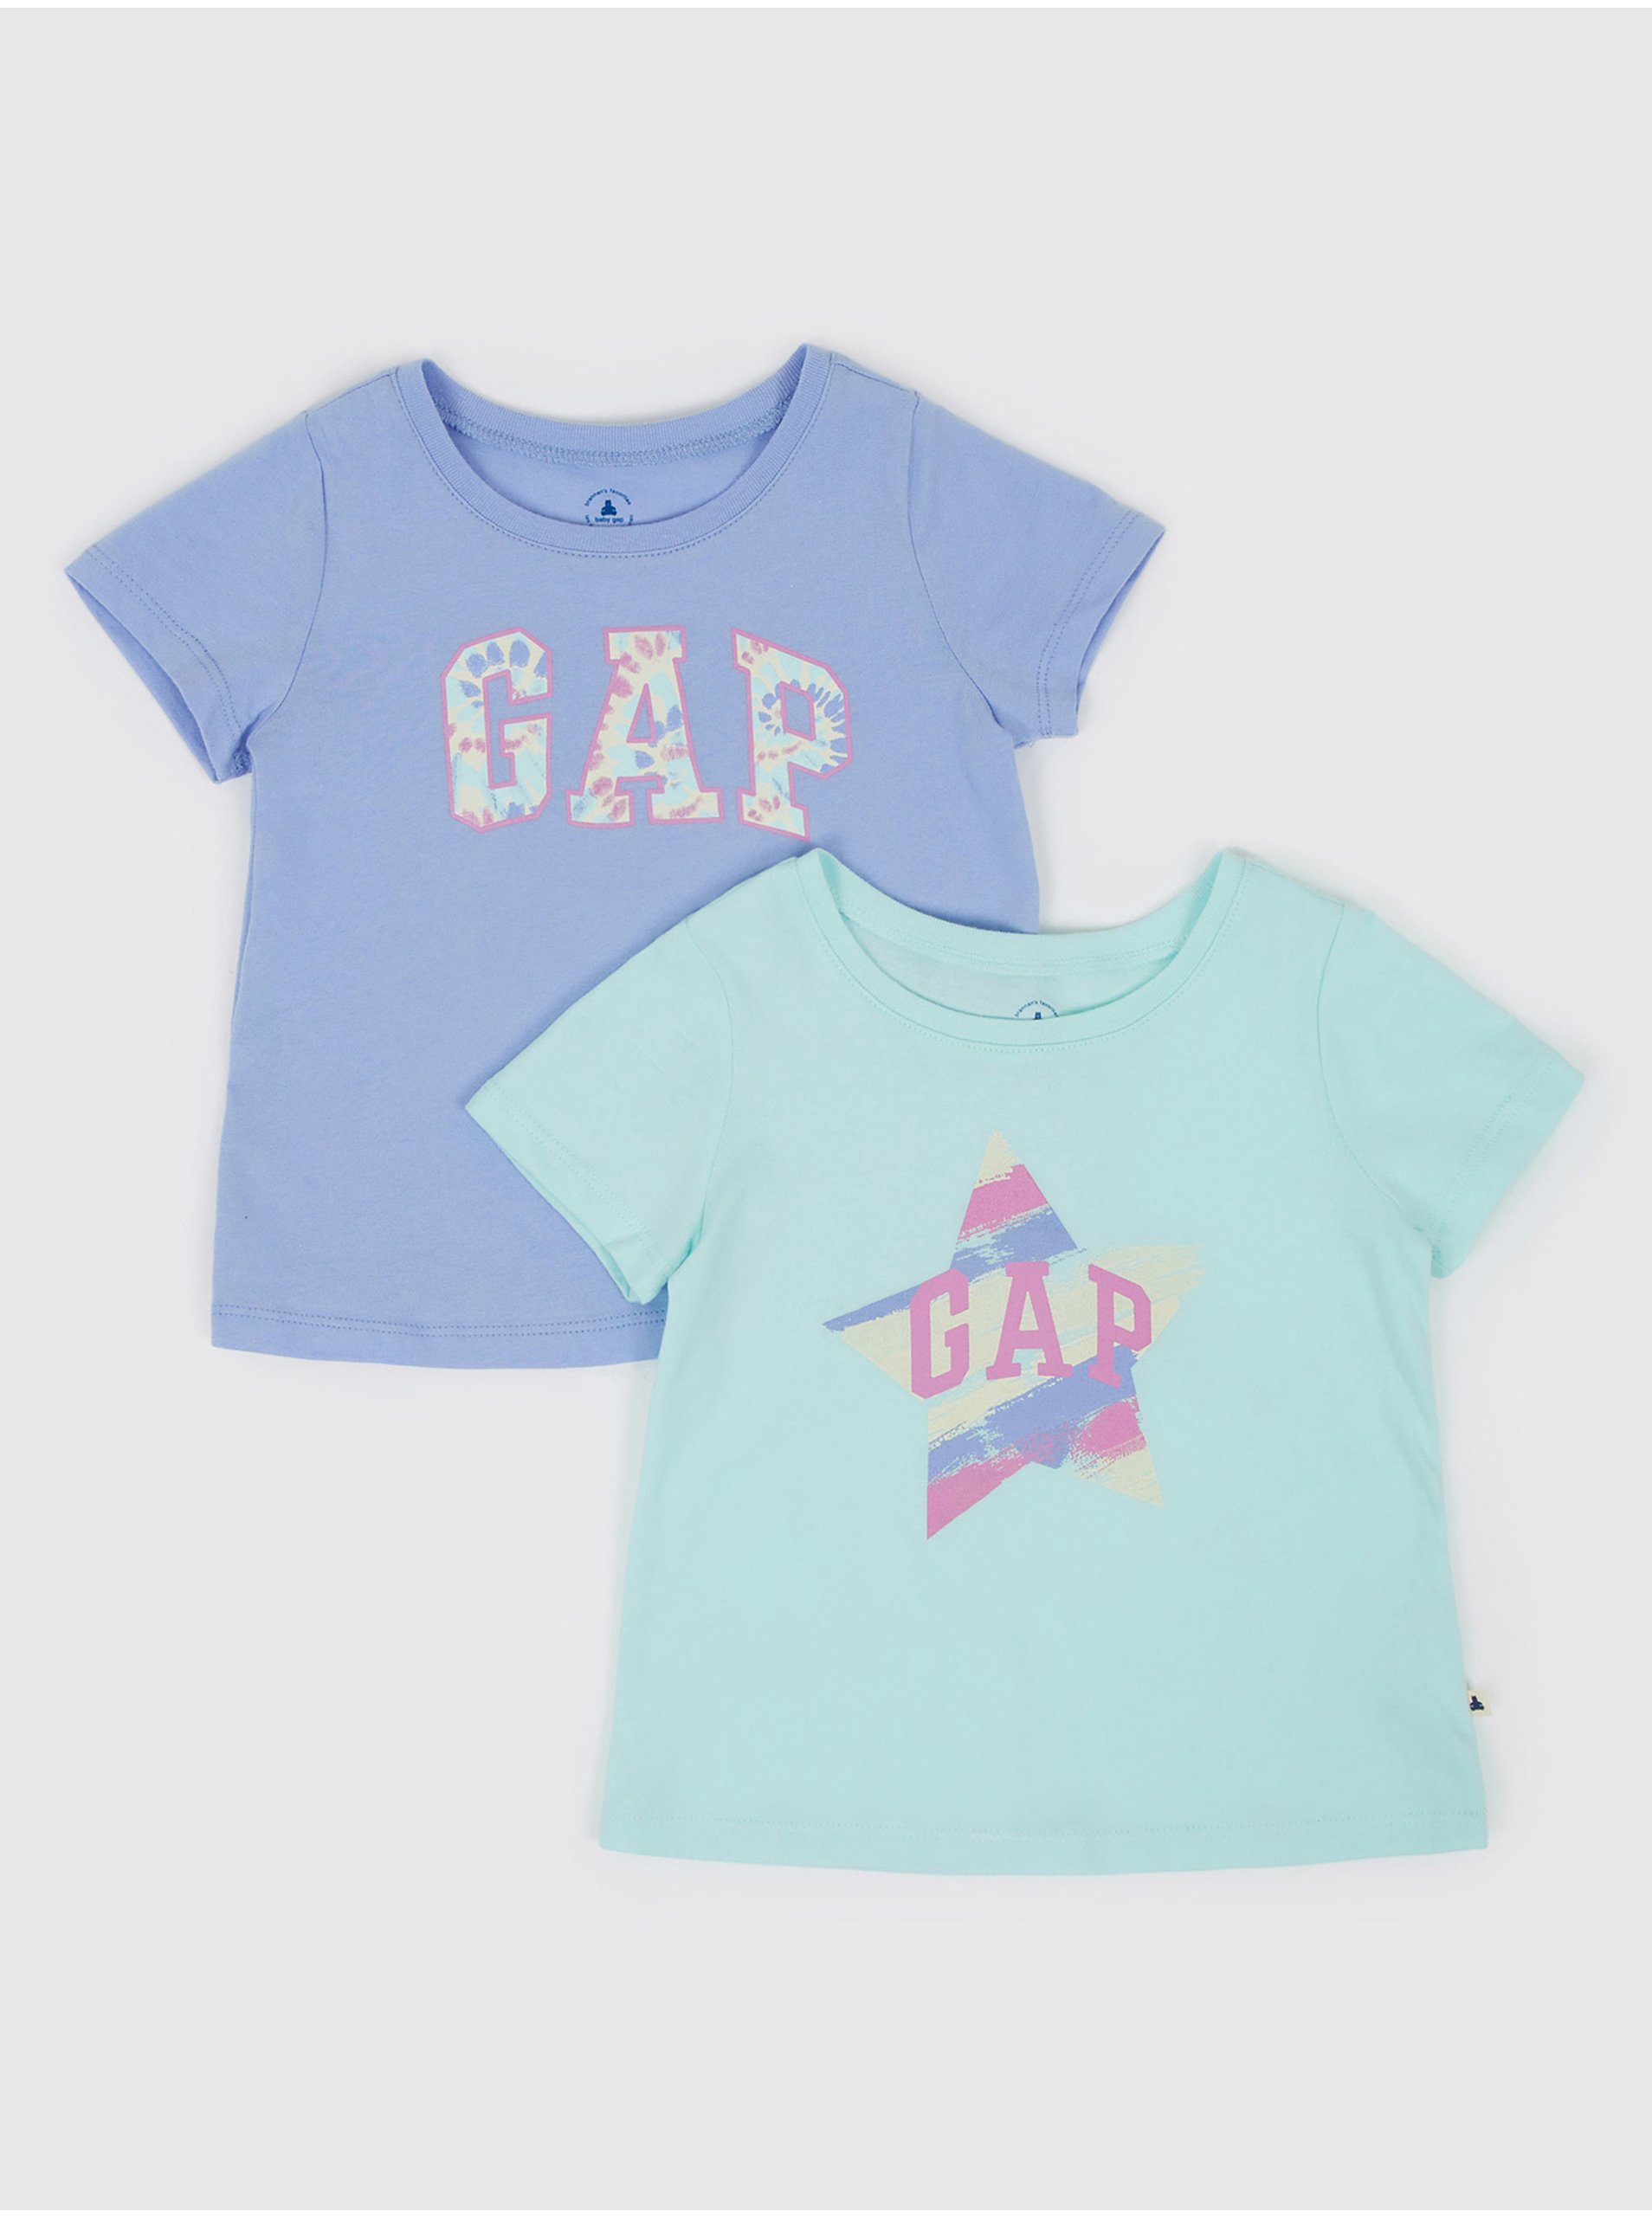 E-shop Barevná holčičí trička logo GAP, 2ks